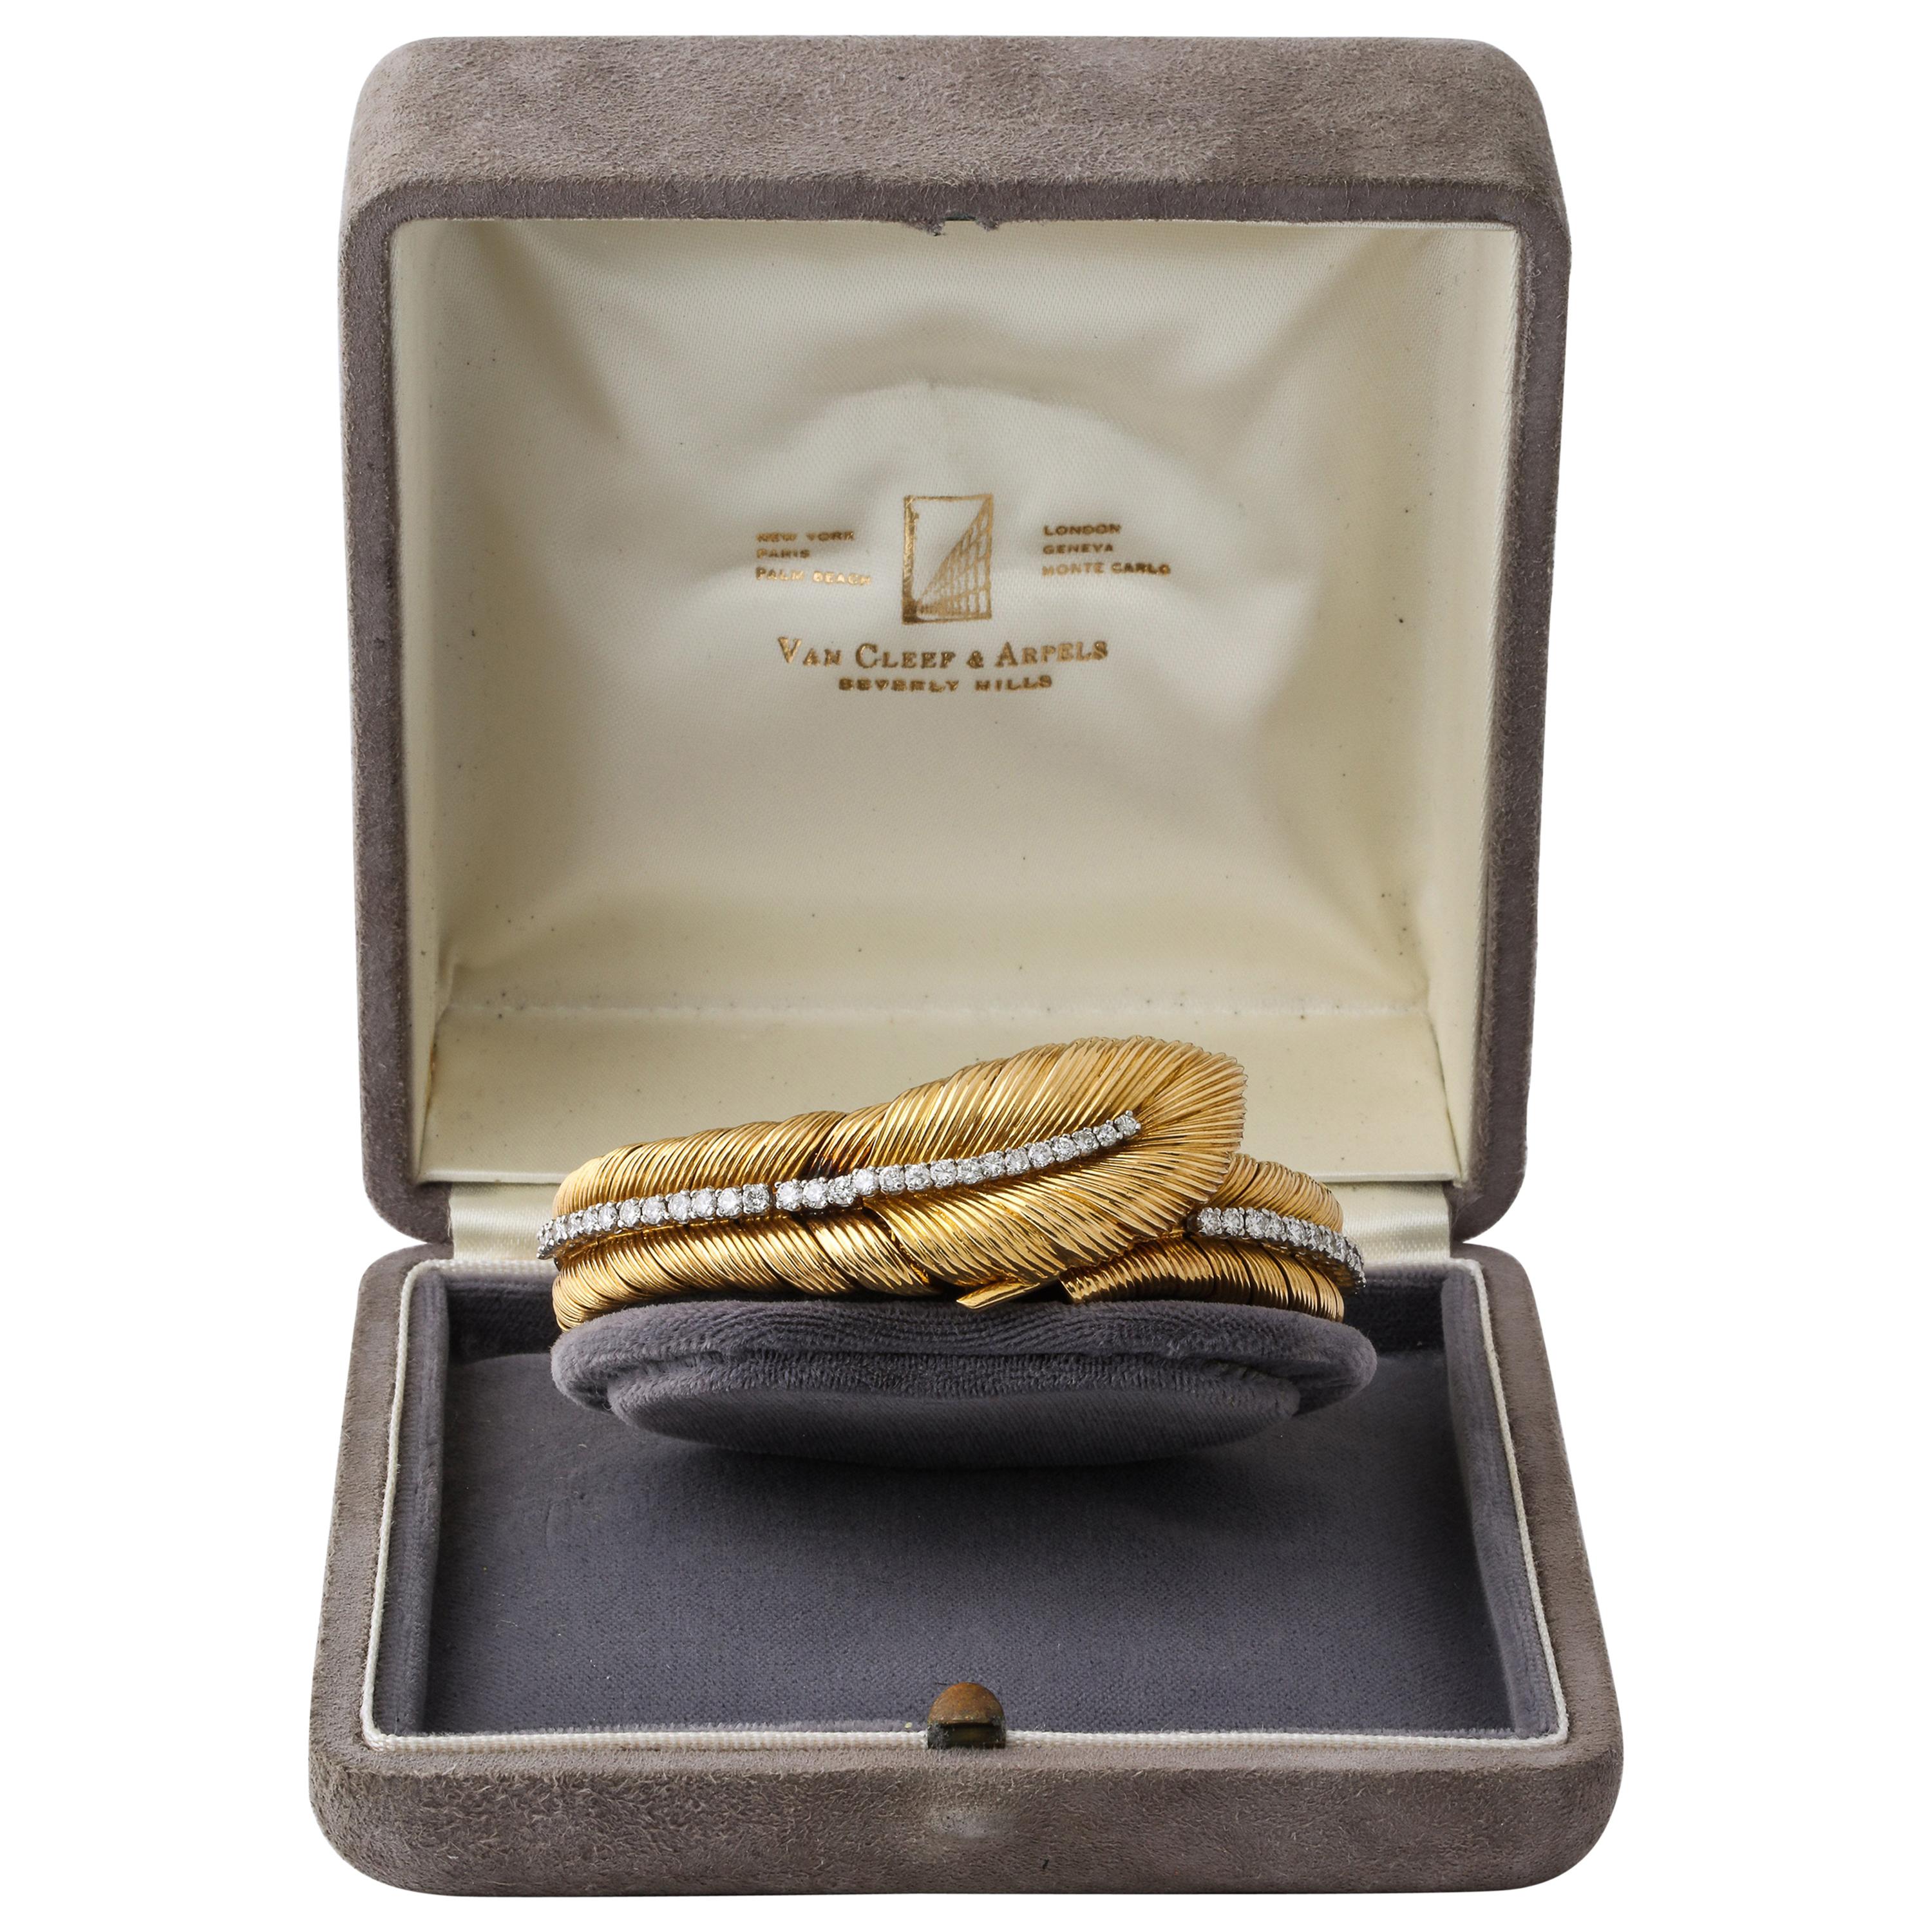 Van Cleef & Arpels Gold Diamond Bracelet Watch with Original Box Foliate Design